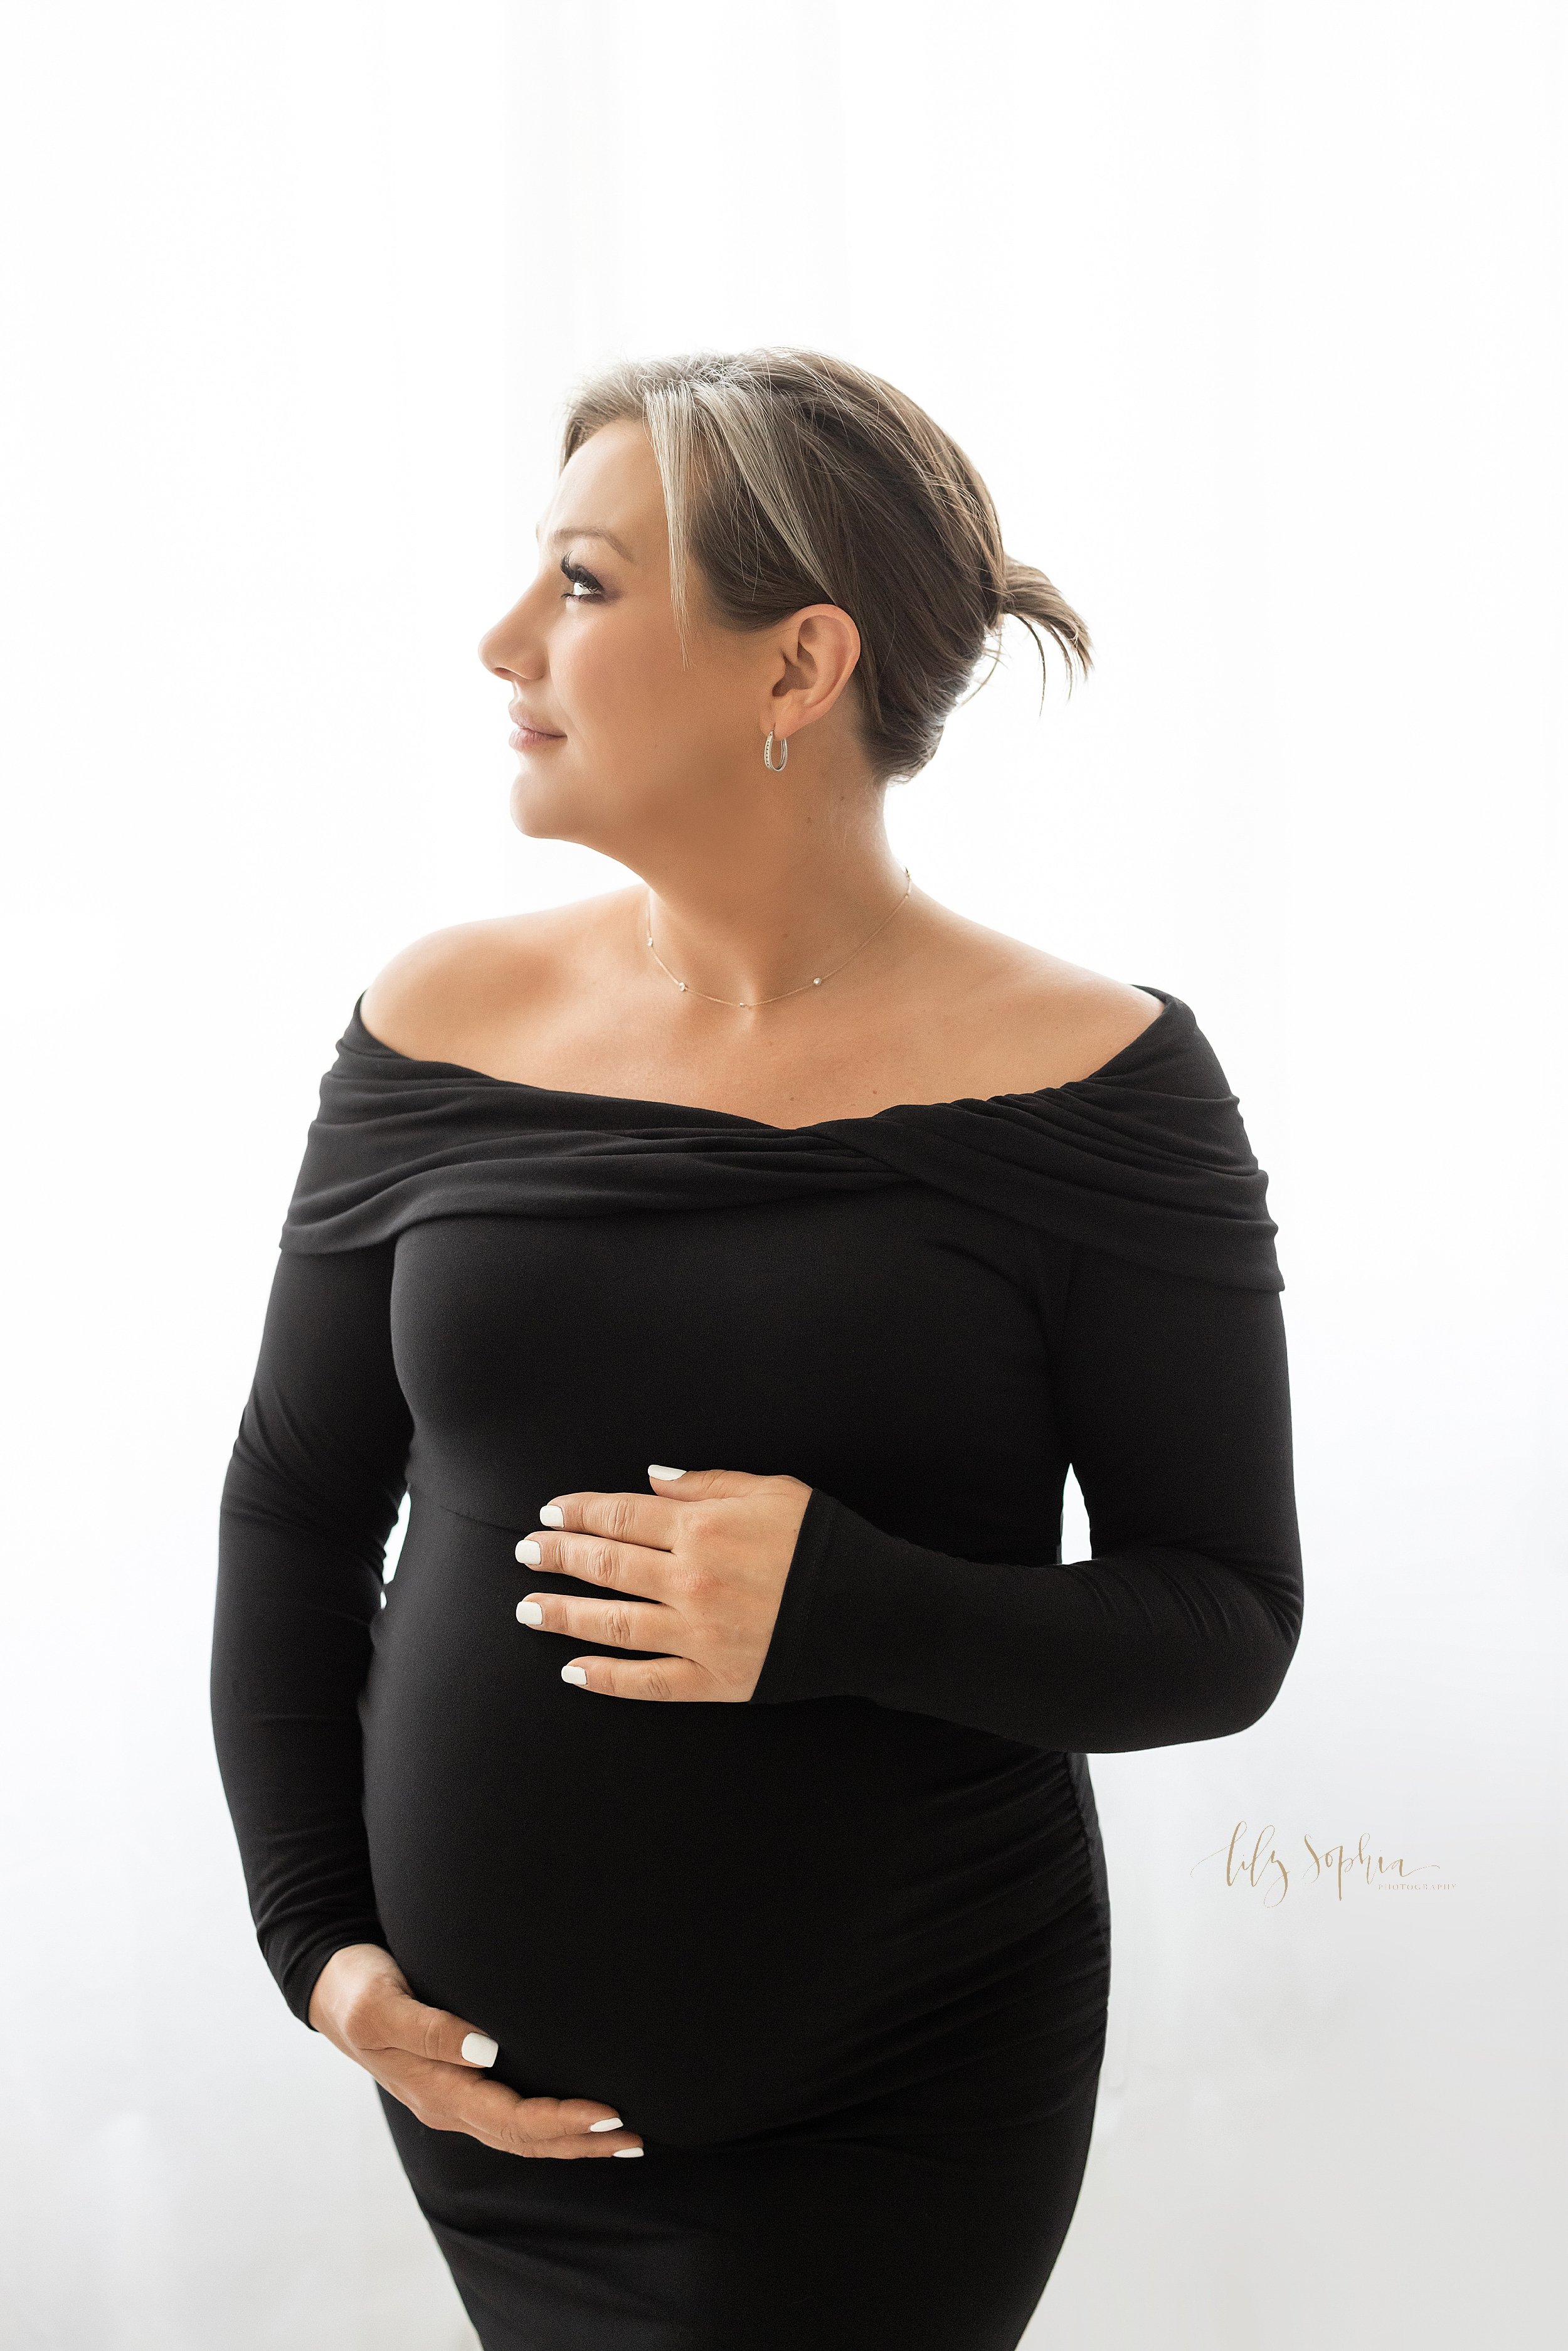 intown-atlanta-grant-park-decatur-kirkwood-ellenwood-maternity-baby-boy-pregnancy-studio-photoshoot_2291.jpg